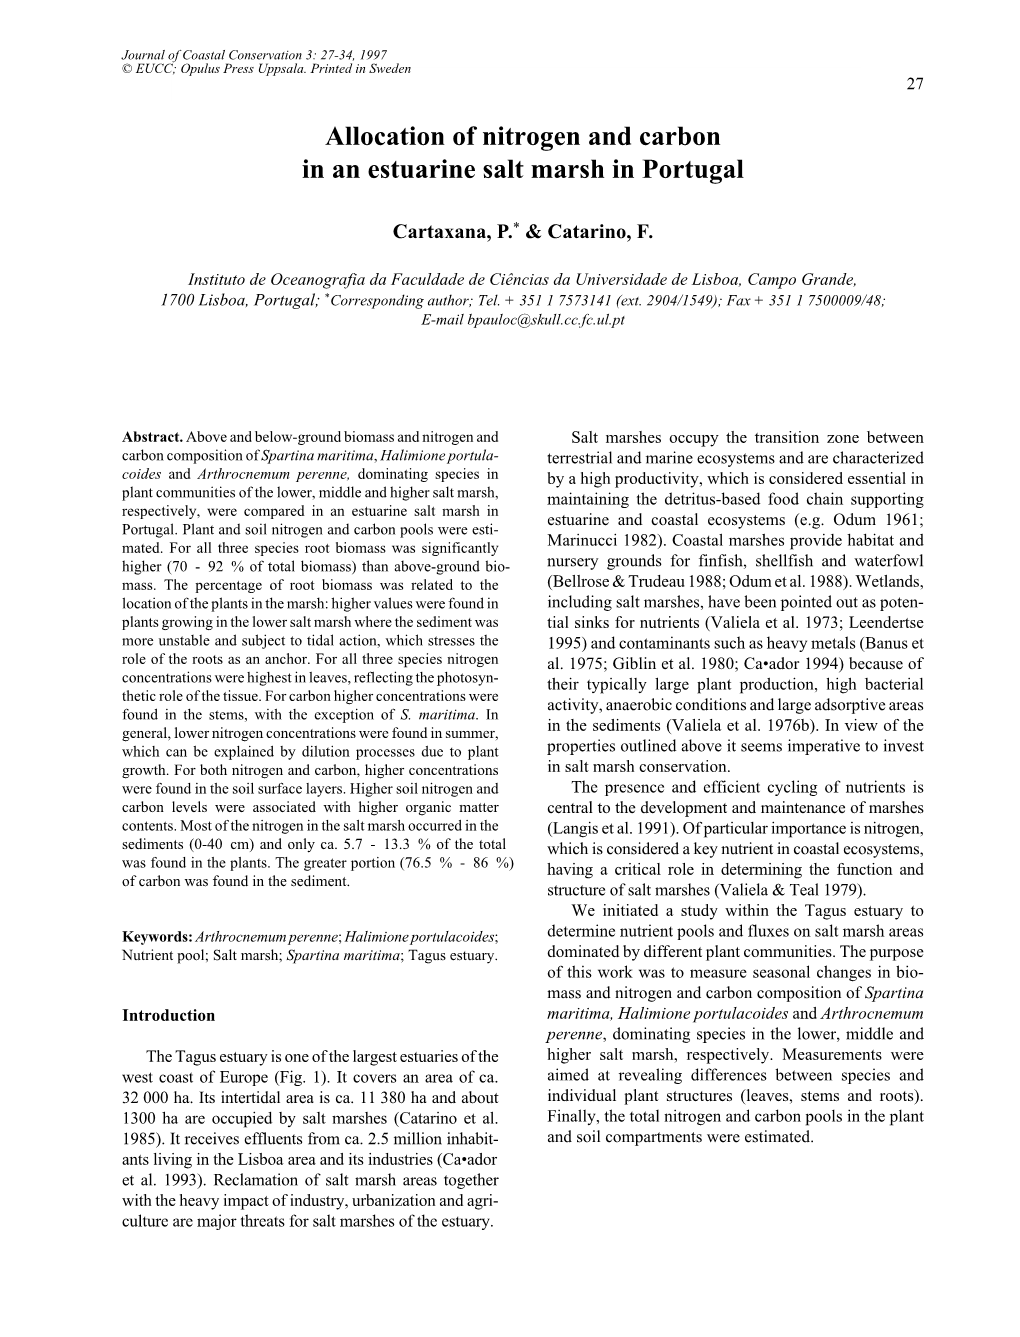 Allocation of Nitrogen and Carbon in an Estuarine Salt Marsh in Portugal - 27